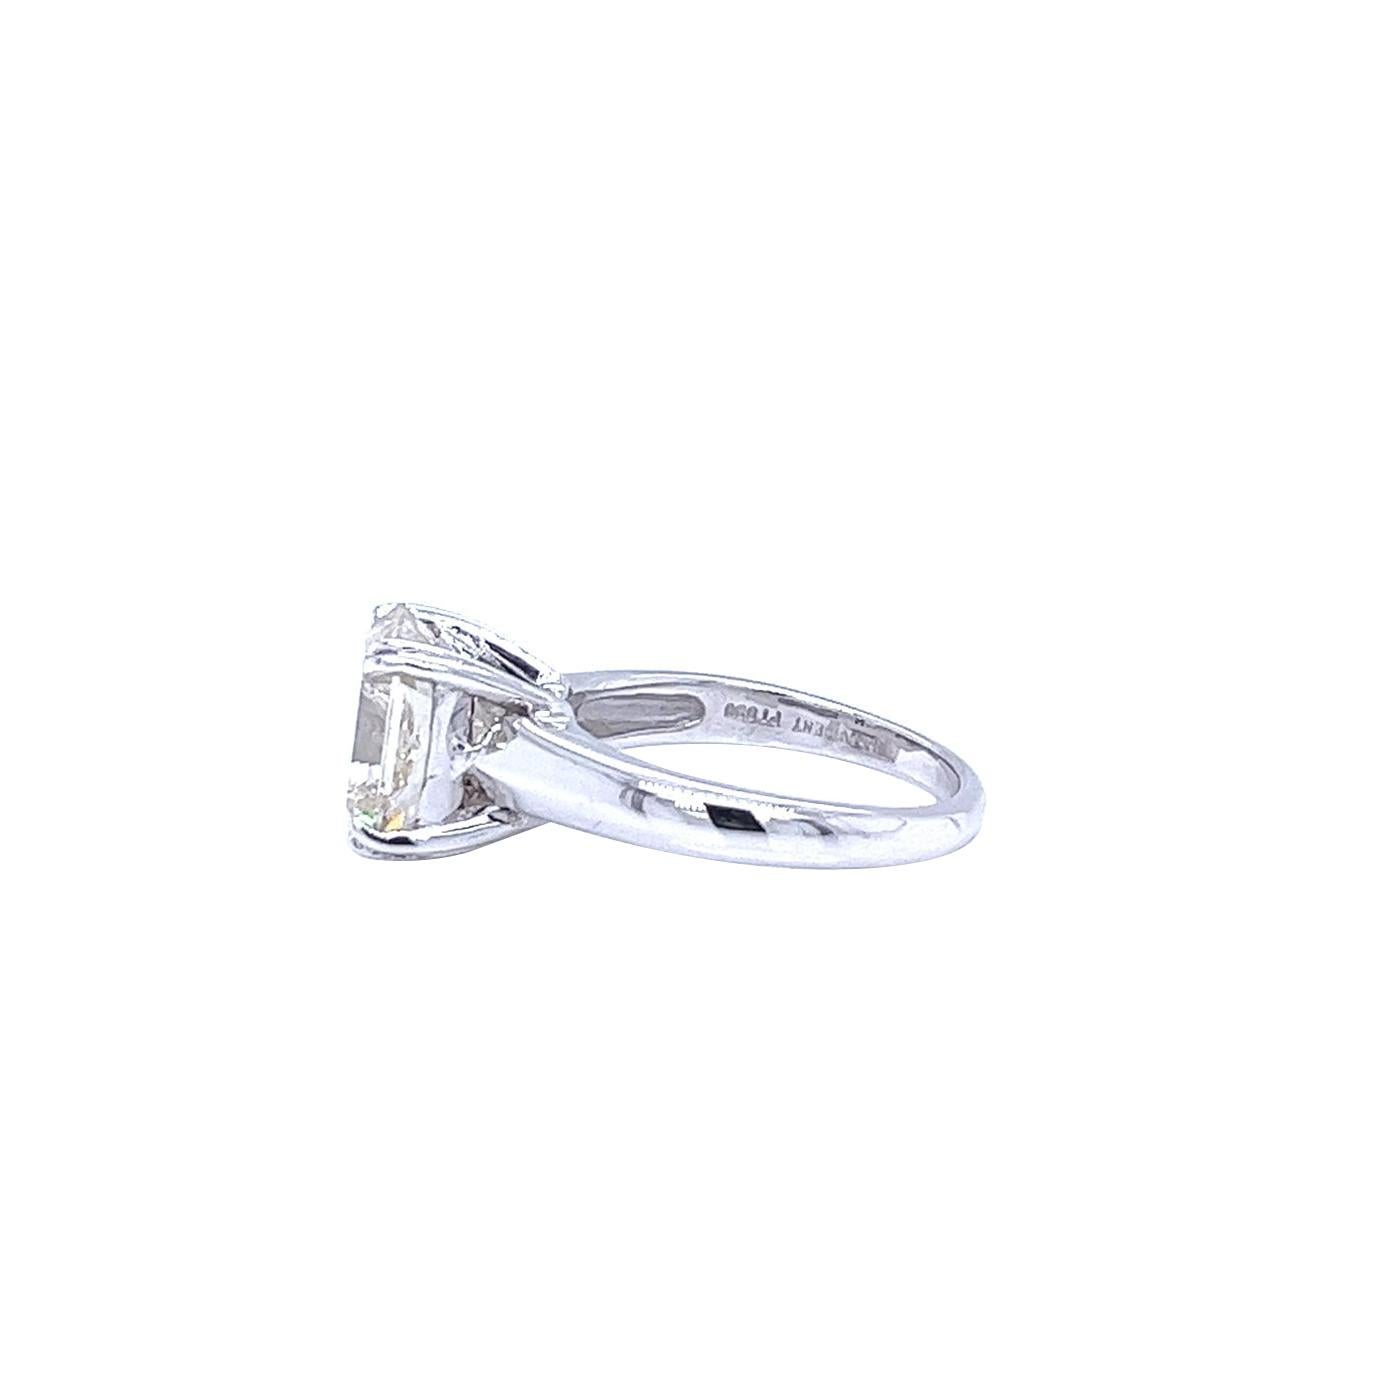 4.28 Carat Natural Square Radiant Cut Diamond Engagement Ring in Platinum For Sale 1